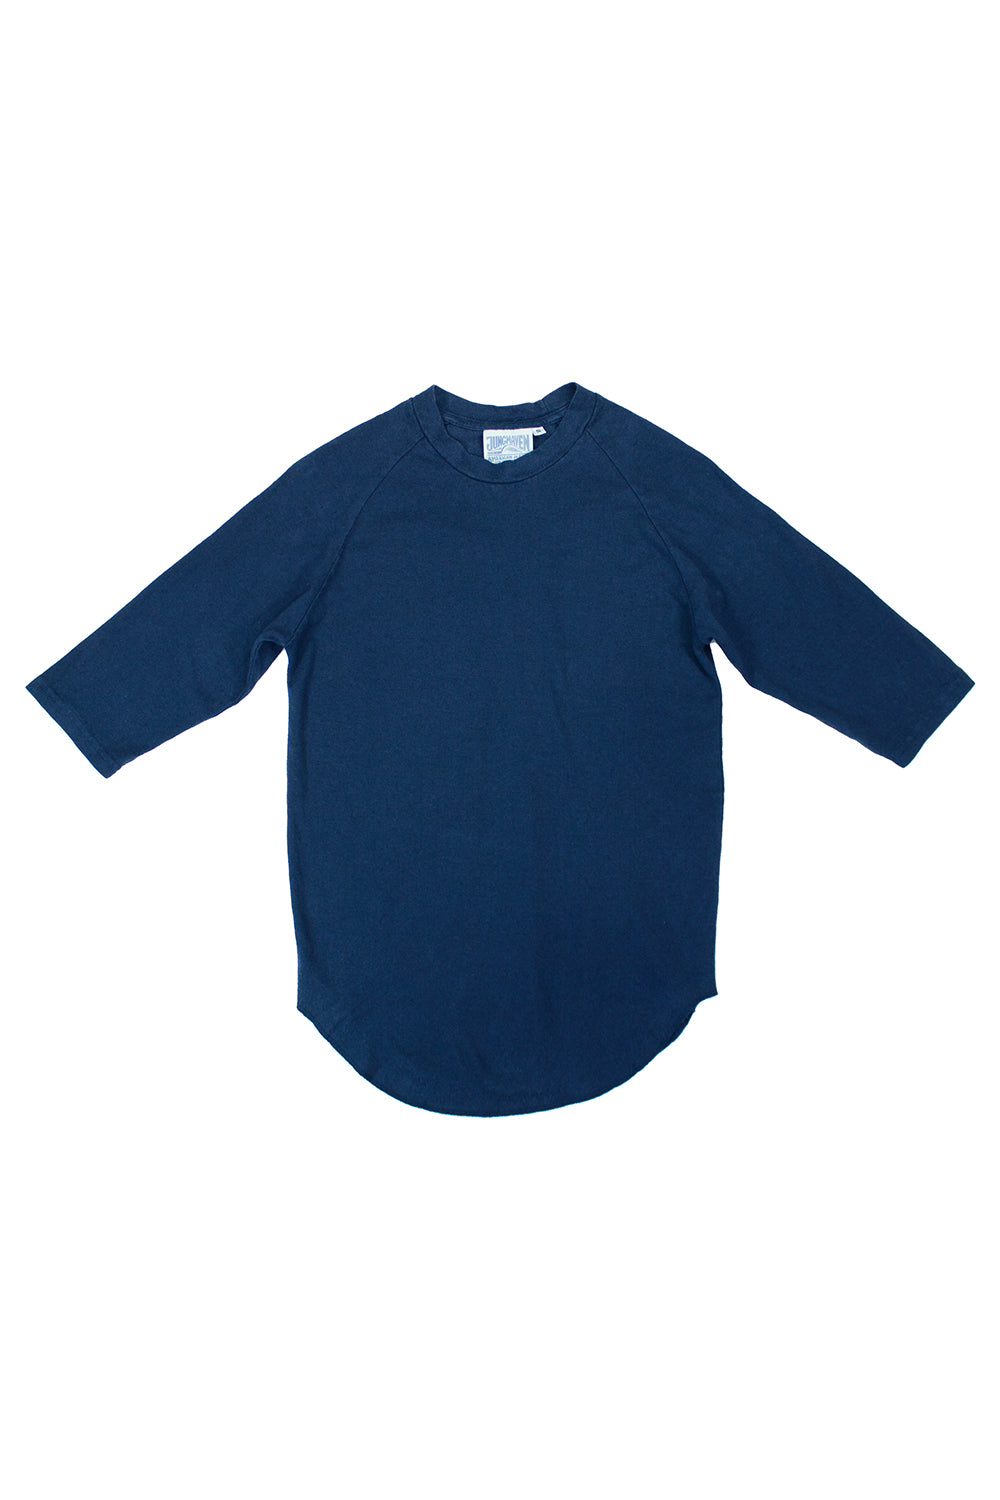 Solid Raglan 3/4 Sleeve | Jungmaven Hemp Clothing & Accessories / Color: Navy